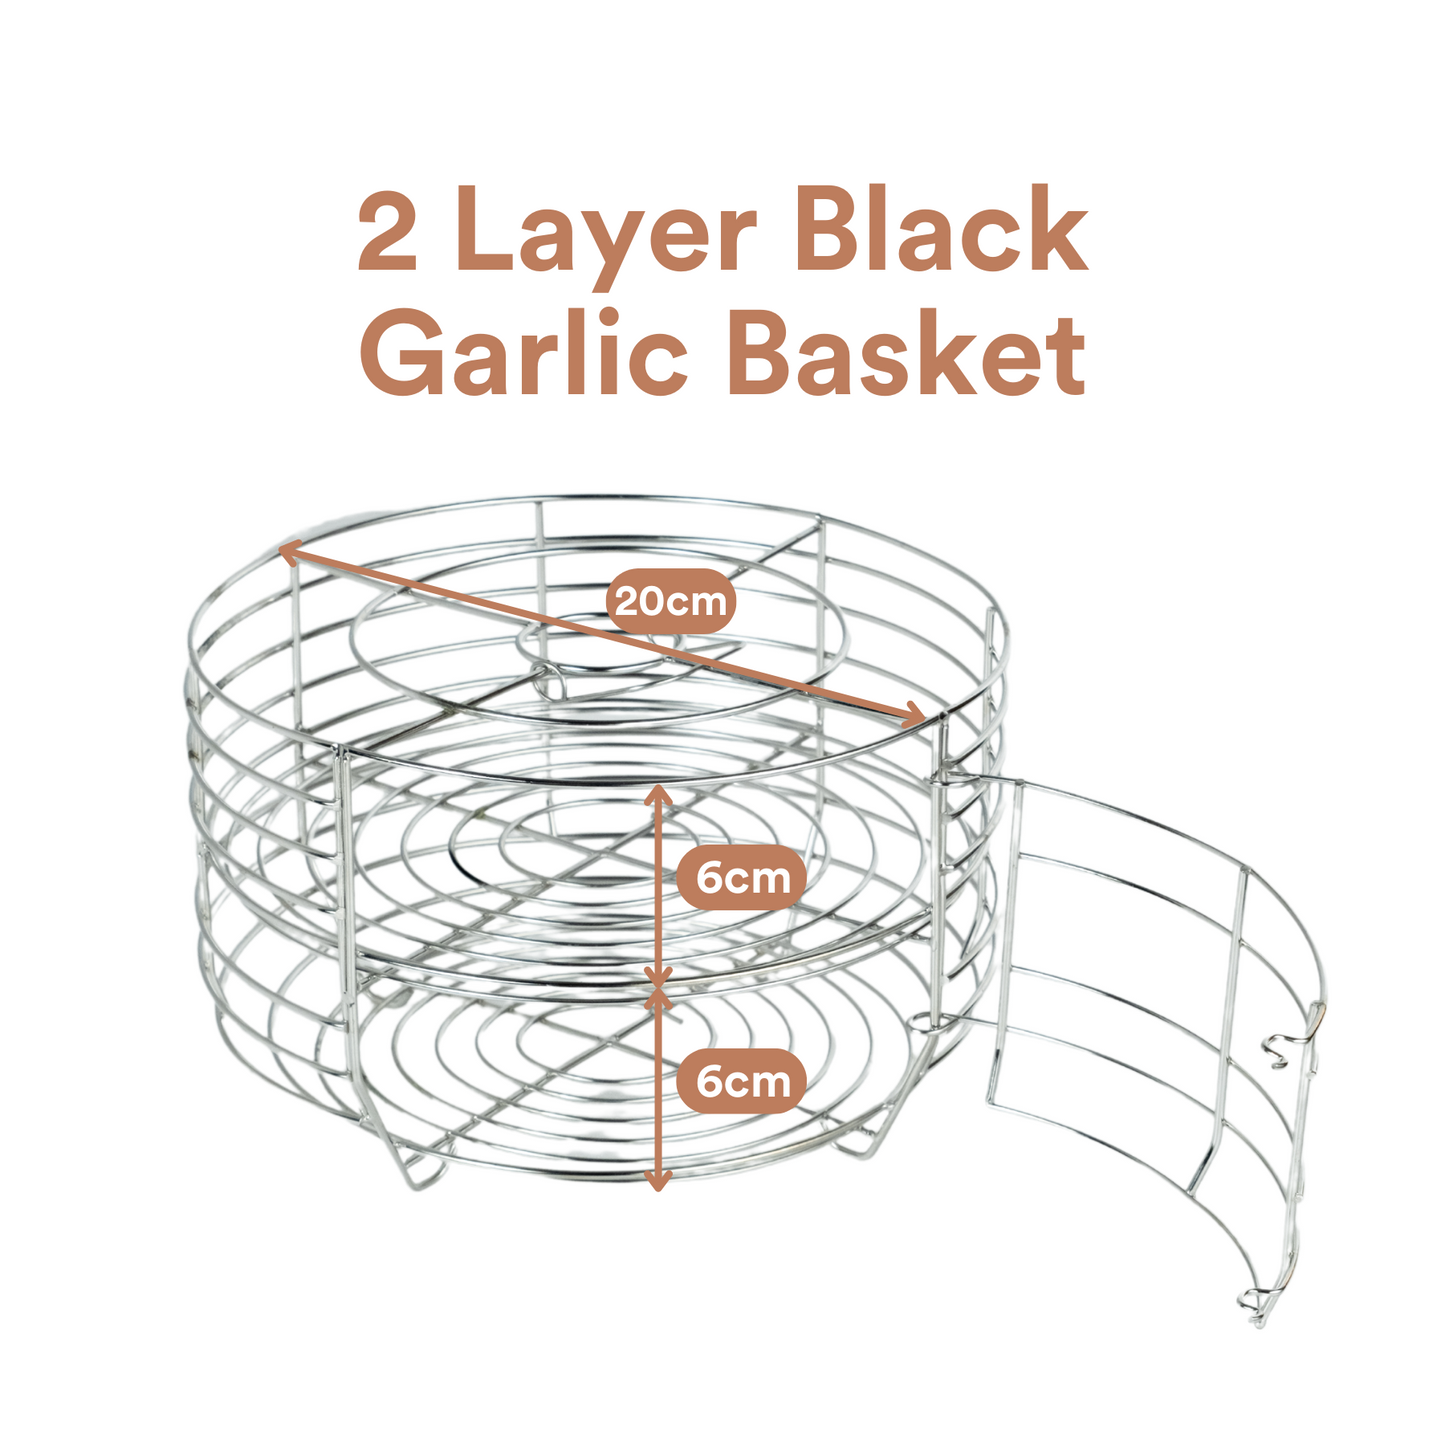 TOYOMI 5.0L Micro-com Multi Healthy Fermentation Pot (Black Garlic Maker) BGM 8810 - TOYOMI